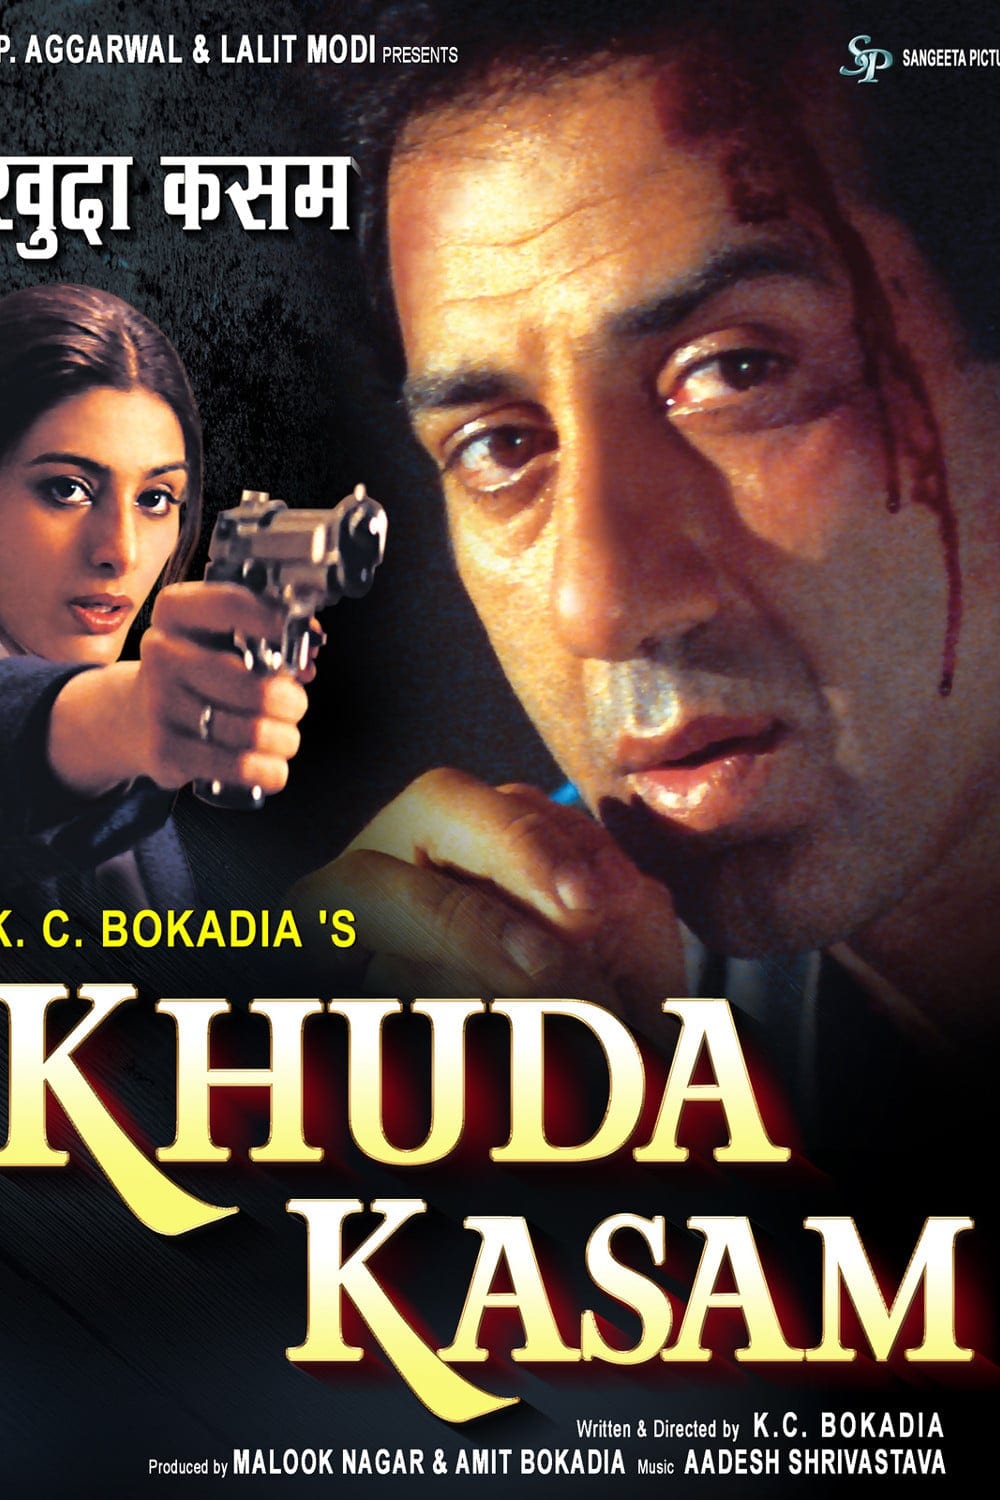 Poster for the movie "Khuda Kasam"